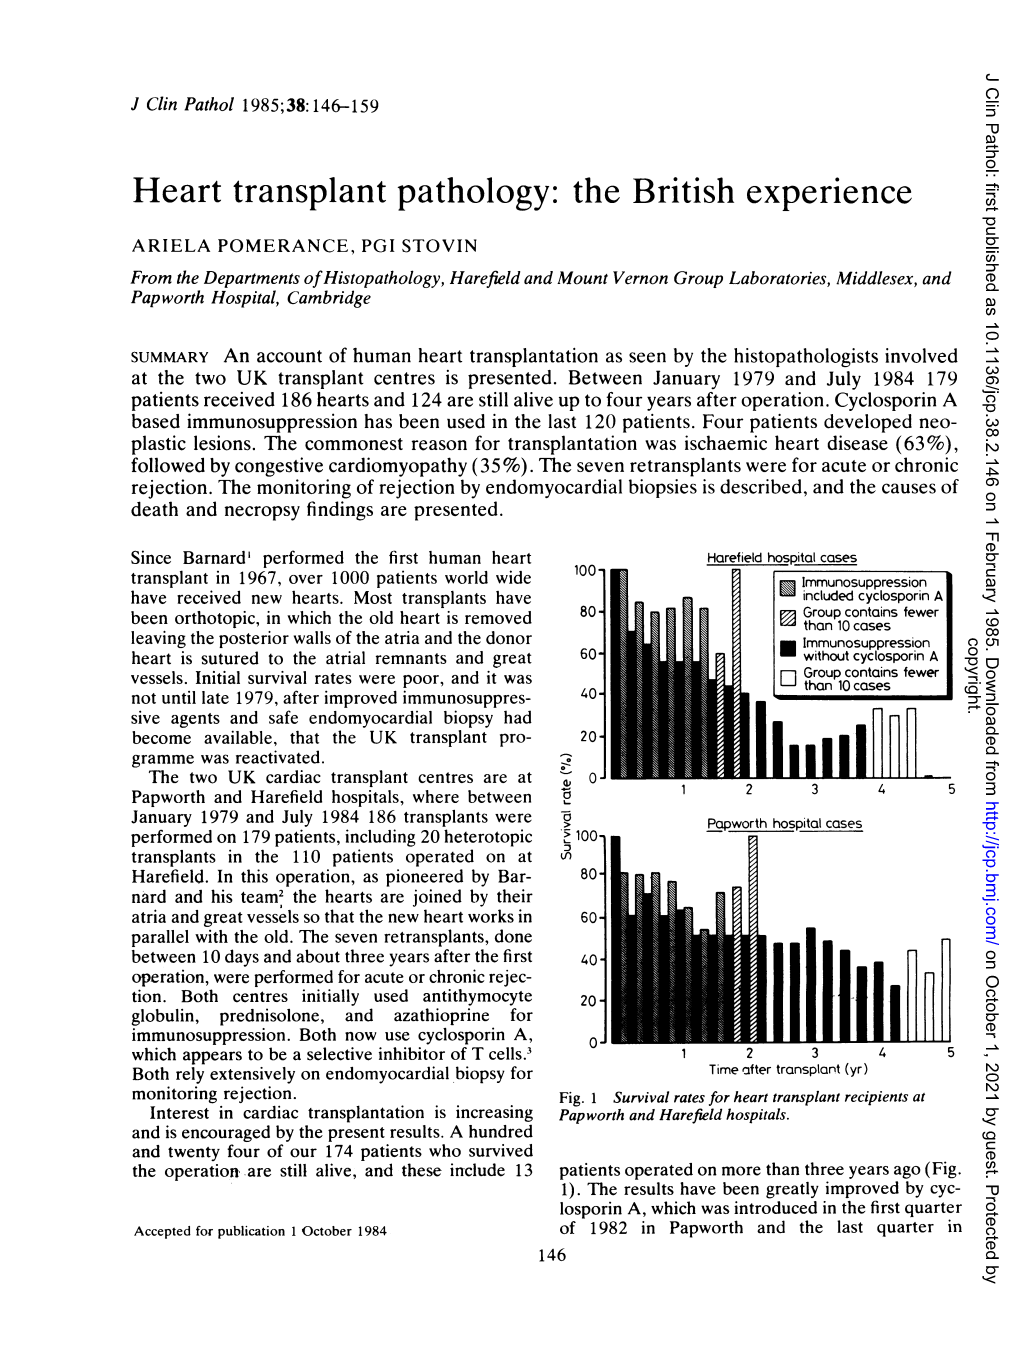 Heart Transplant Pathology: the British Experience